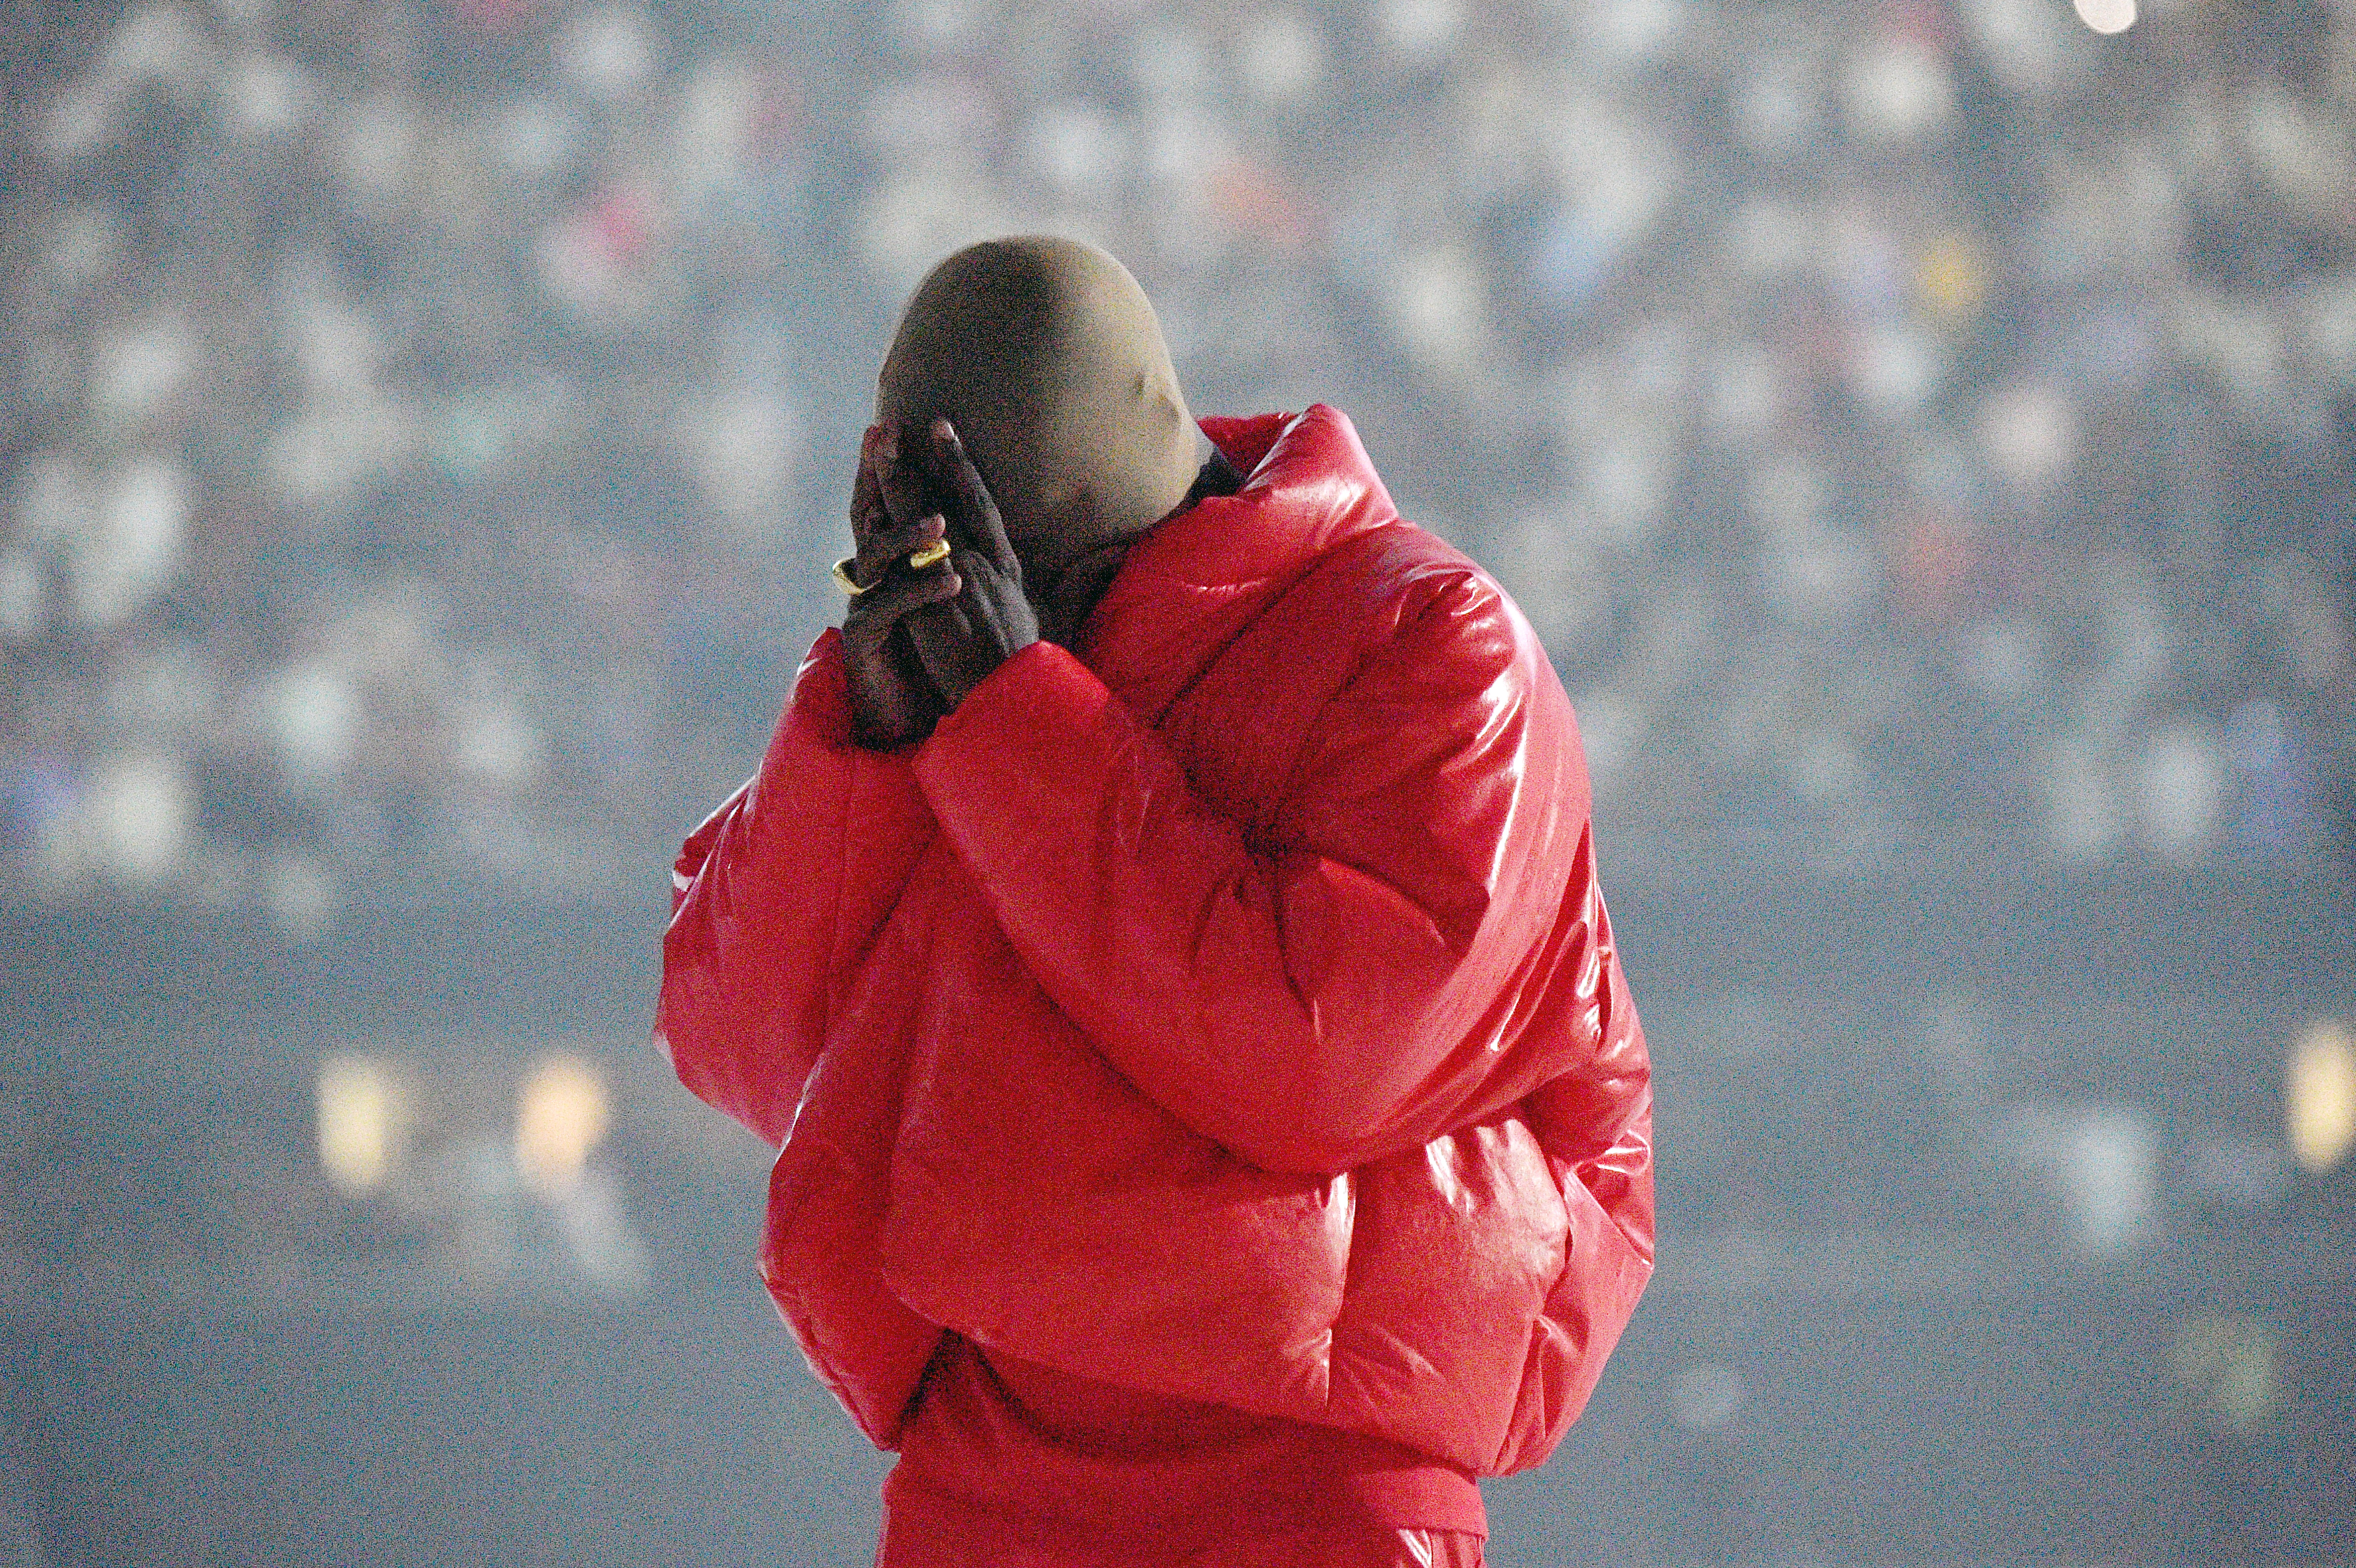 Donda Kanye cries